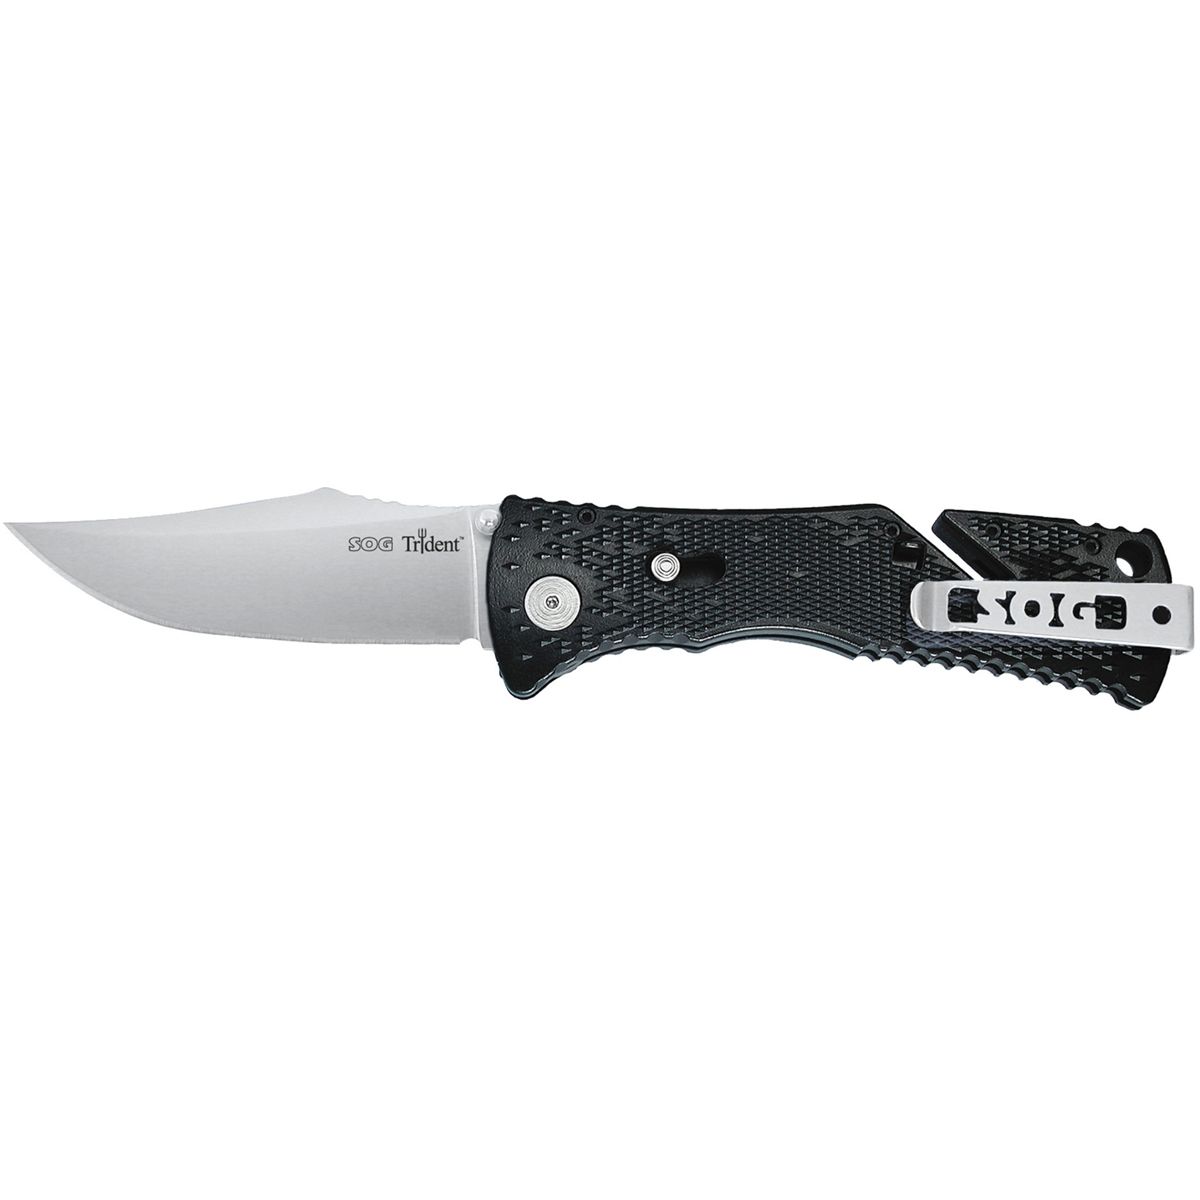 Trident Folding Knife w/ Satin Polish Blade - 3.75 In